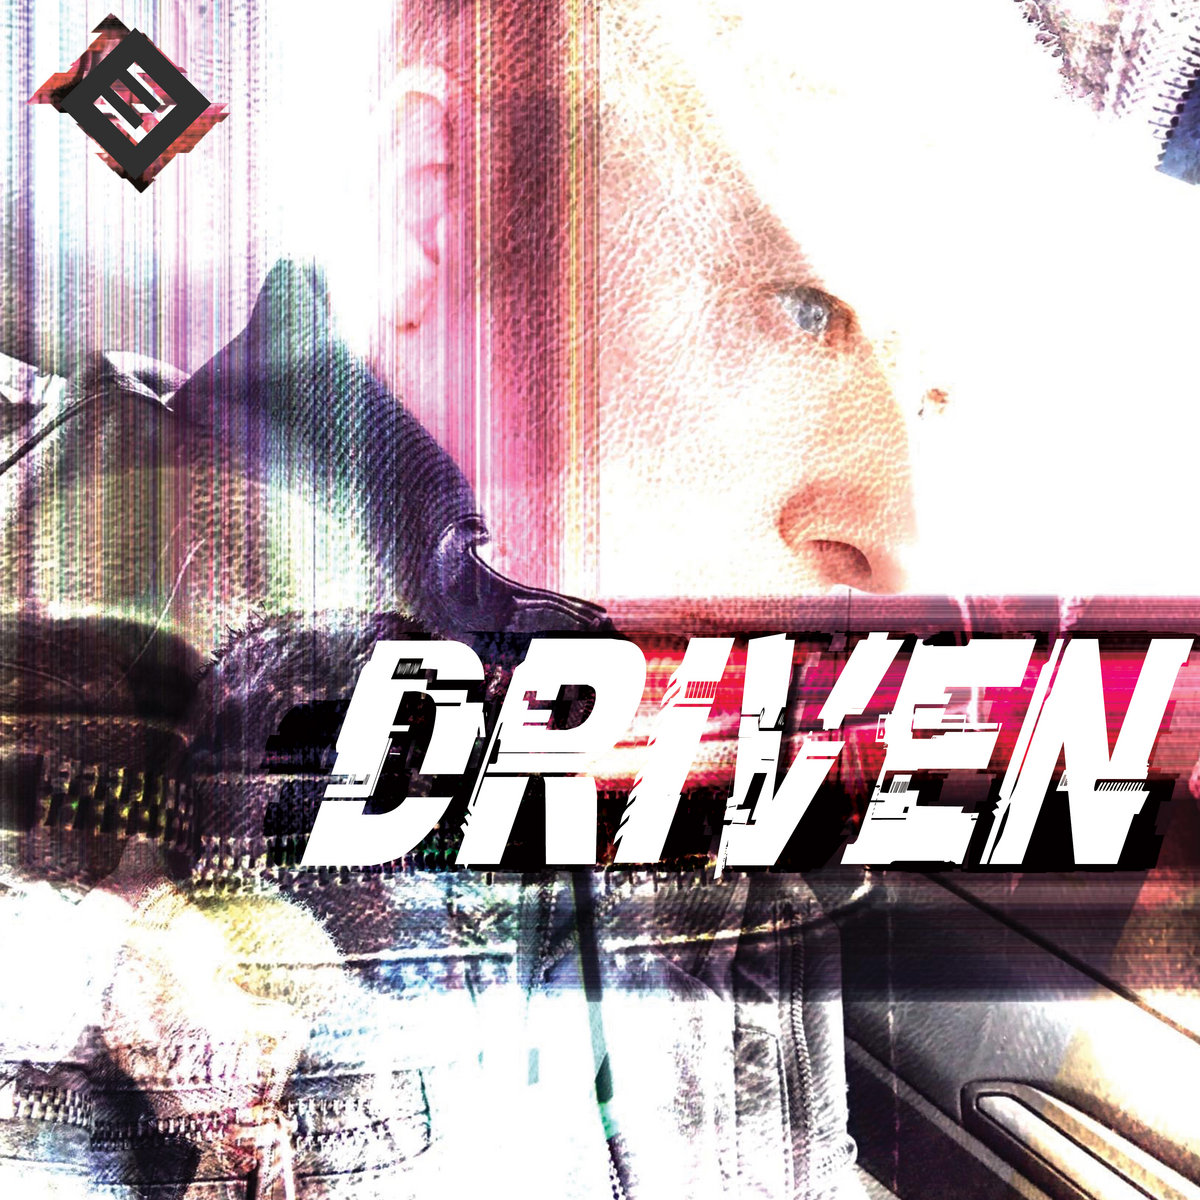 Driven (radio mix)